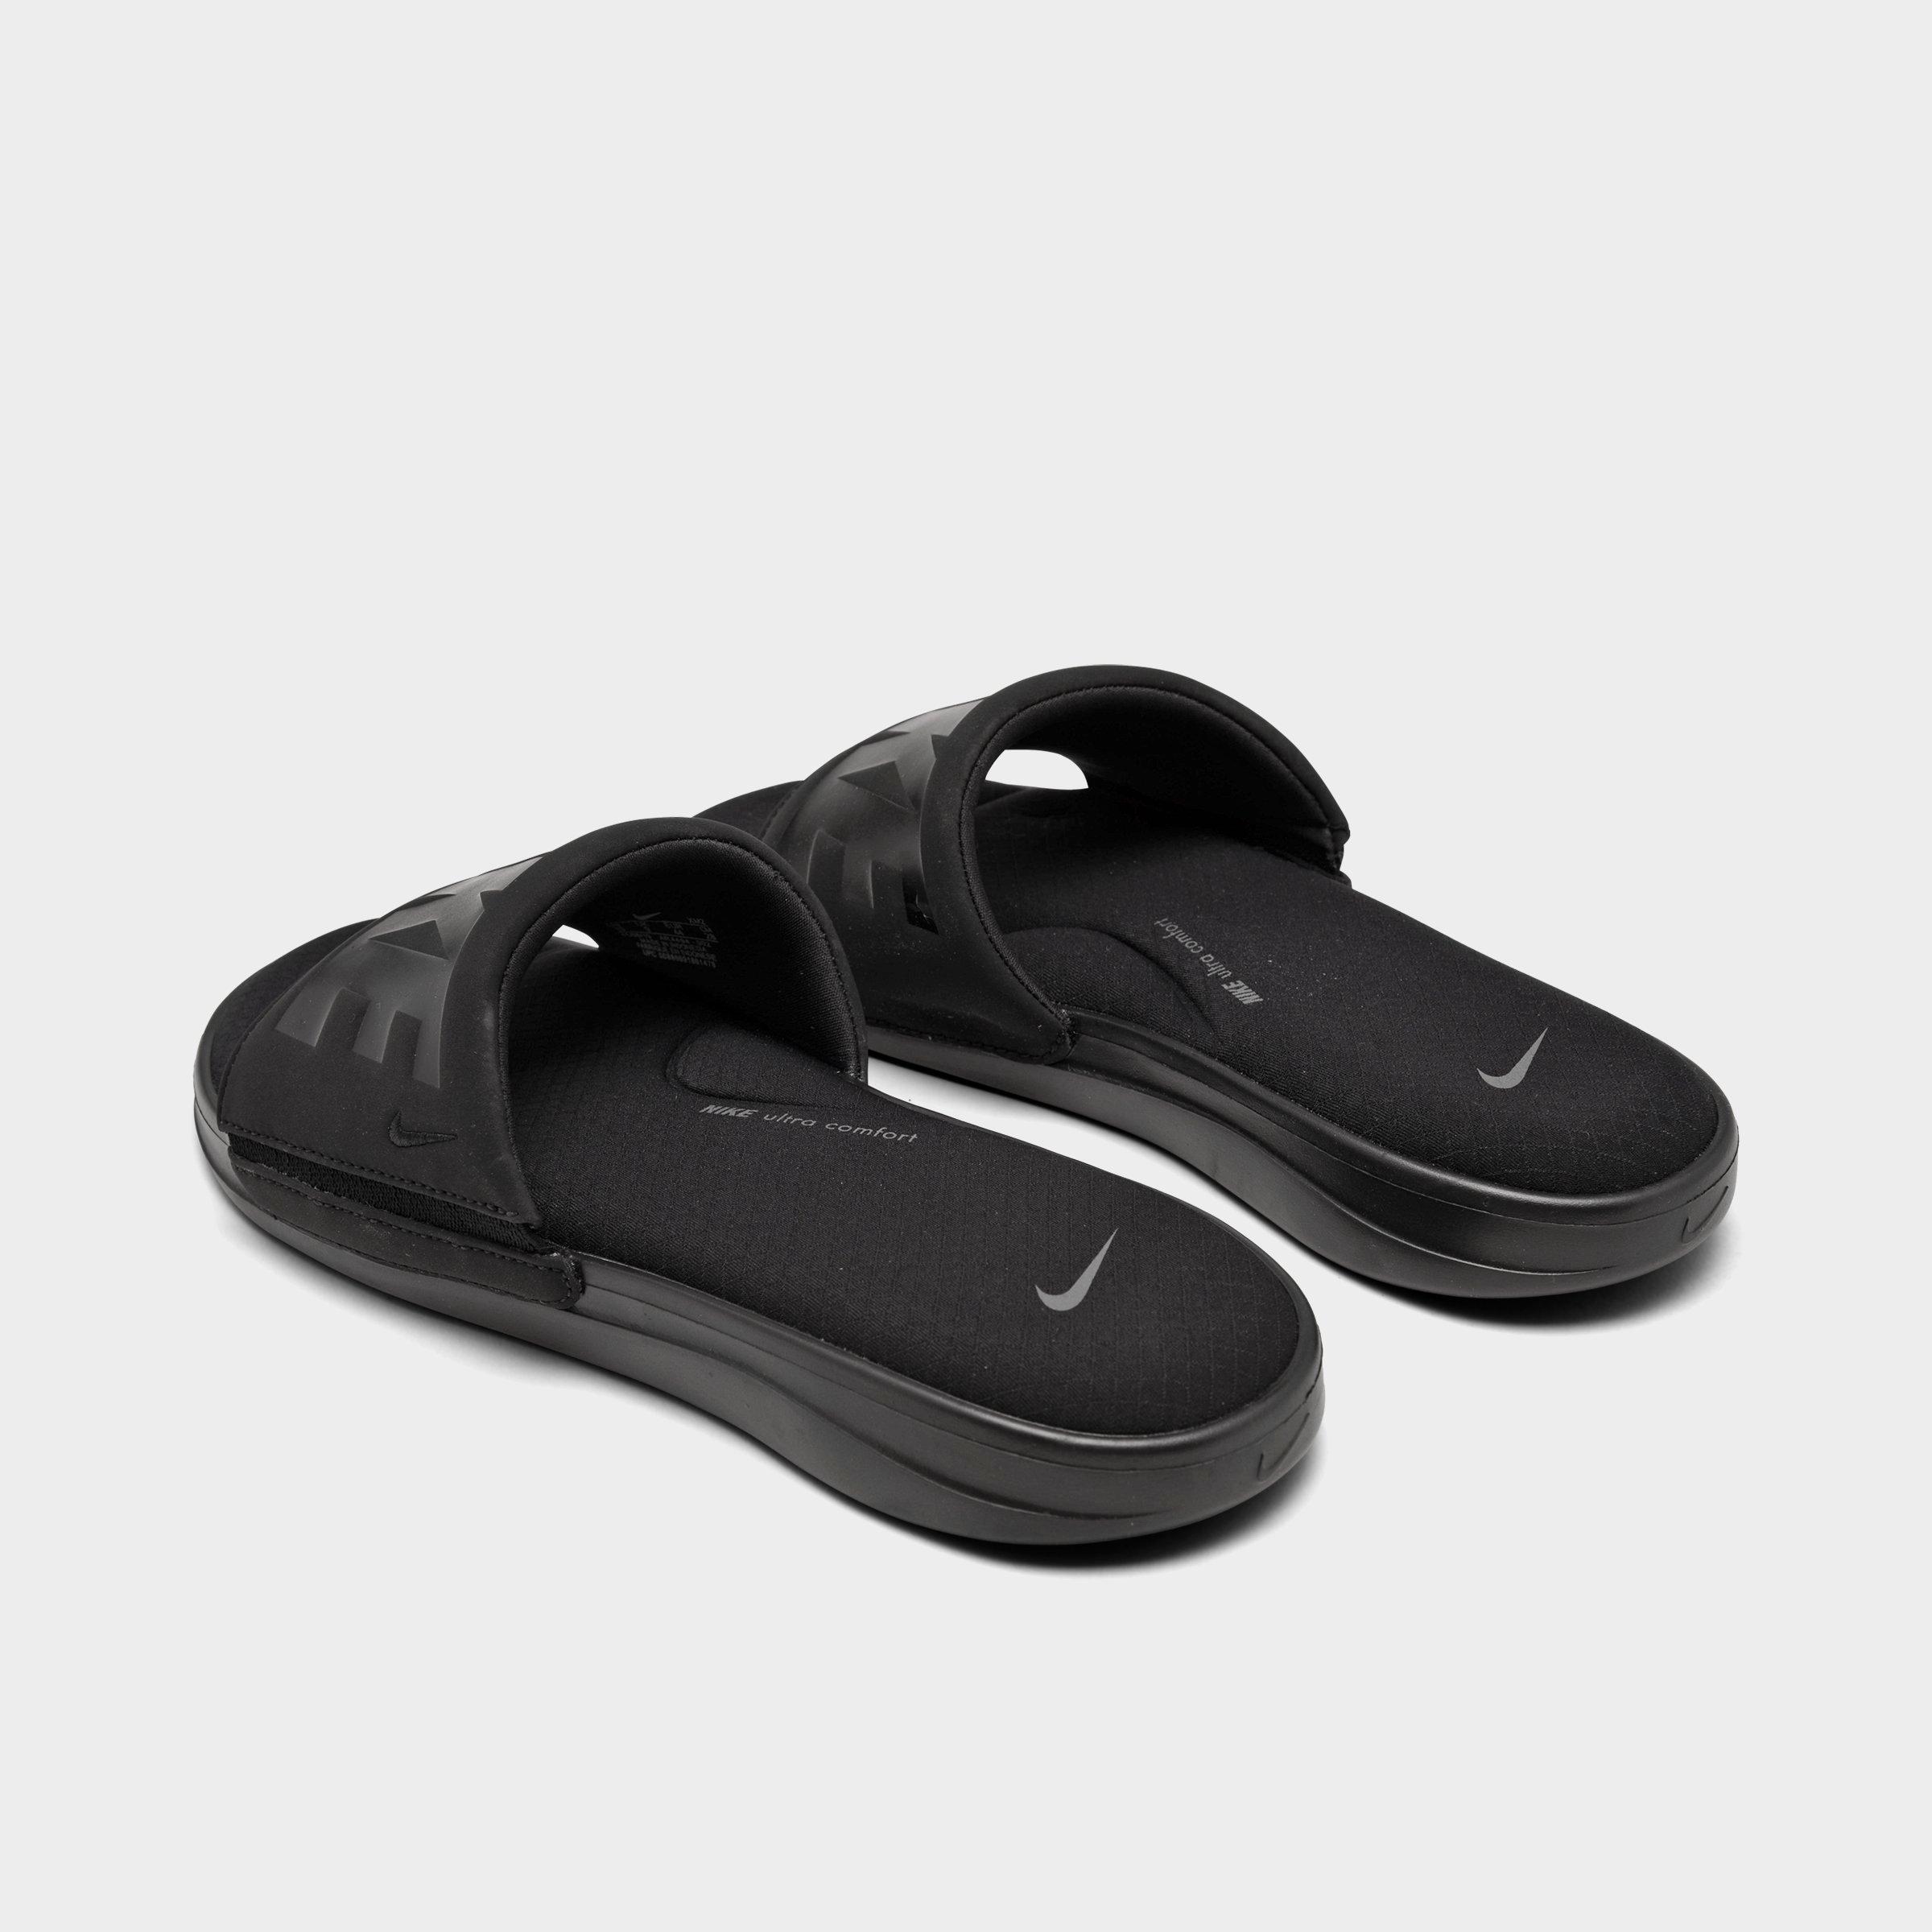 nike ultra comfort 3 men's slide sandals